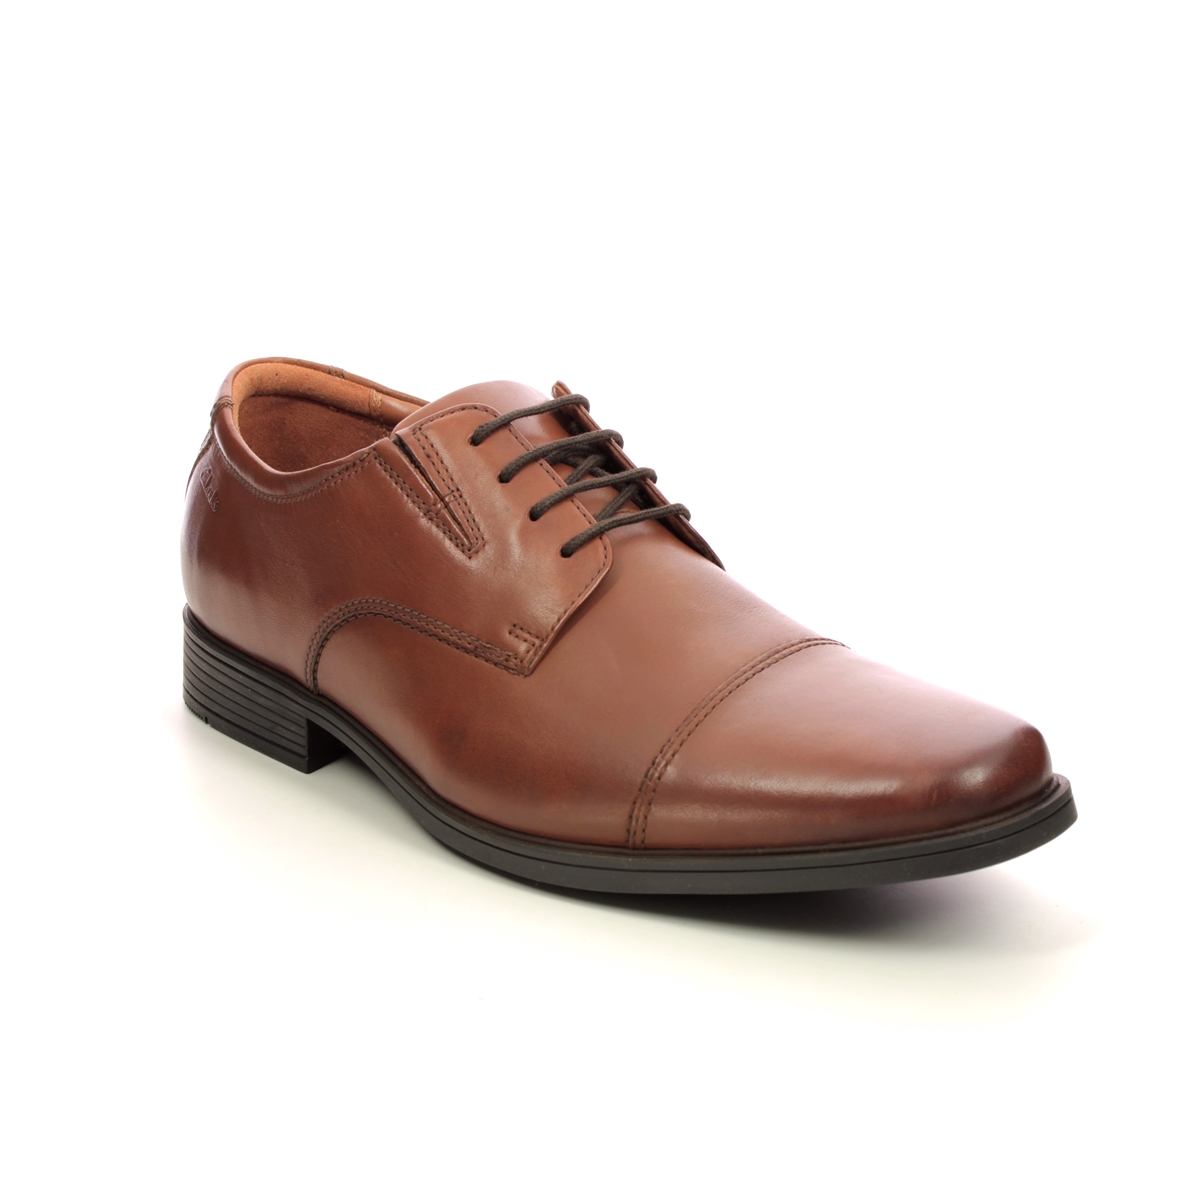 Clarks Tilden Cap Dark Tan Mens Formal Shoes 300968H In Size 6 In Plain Dark Tan H Width Fitting Extra Wide